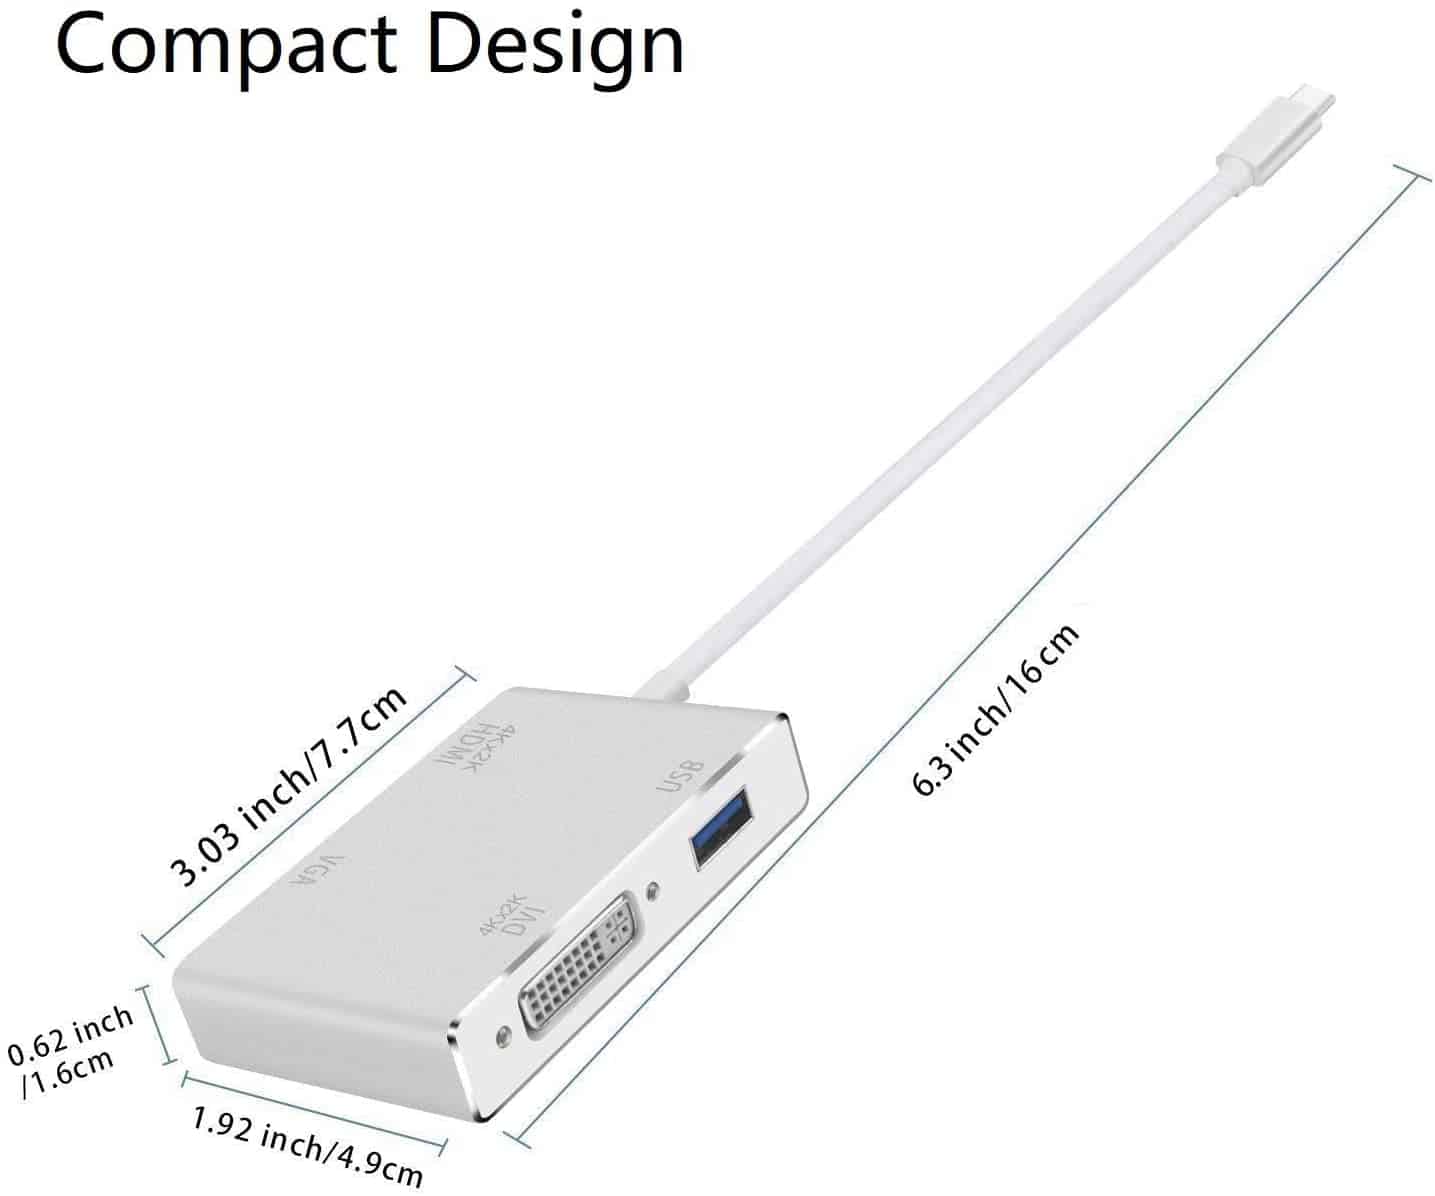 Adaptateur USB C vers HDMI, Hub USB 3.1 type C vers HDMI DVI 4K VGA Convertisseur USB (compatible Thunderbolt 3) 4 en 1 USB C Hub adaptateur pour MacBook/MacBook Pro 2016/2017/2018 et plus encore.